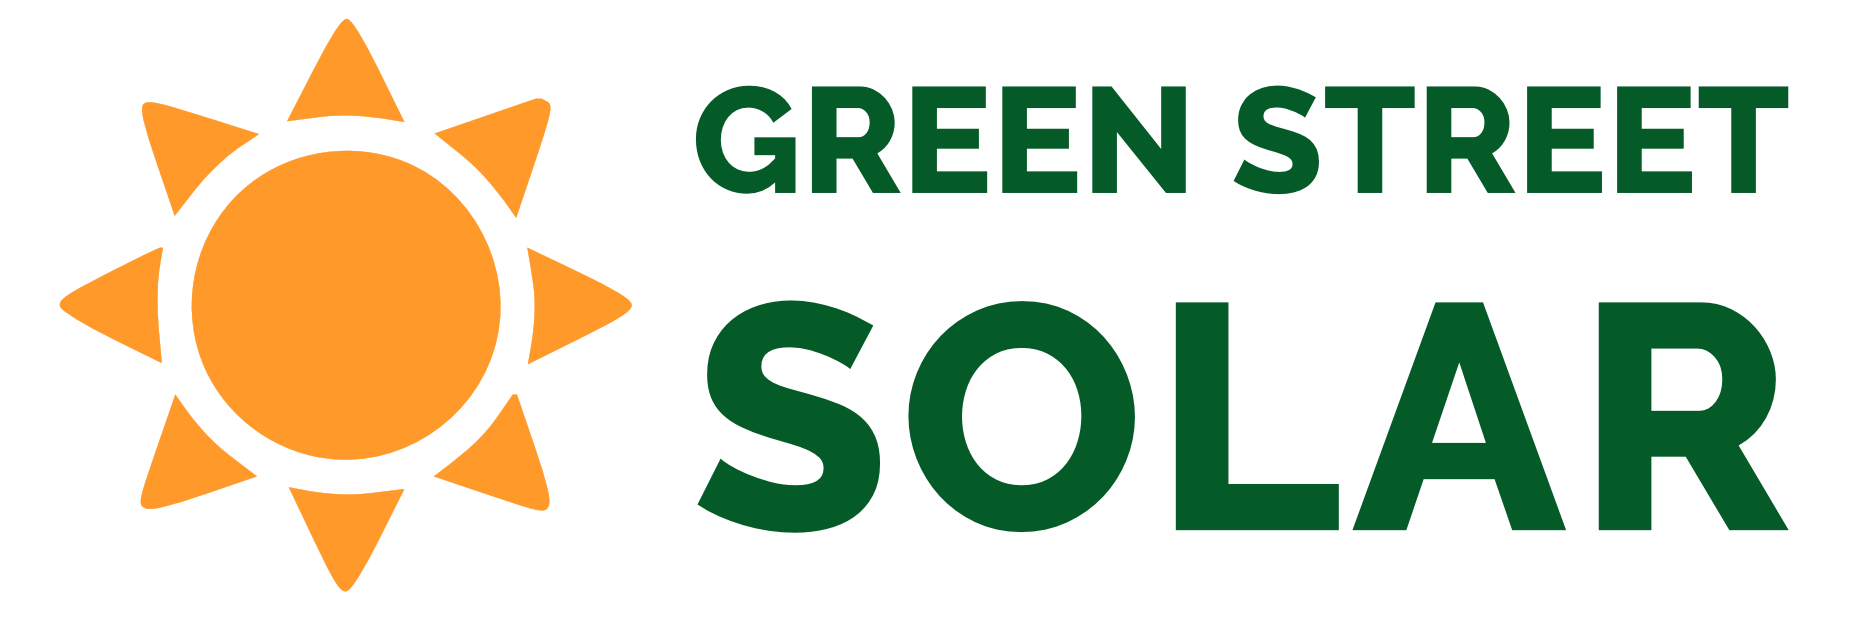 Green Street Solar logo